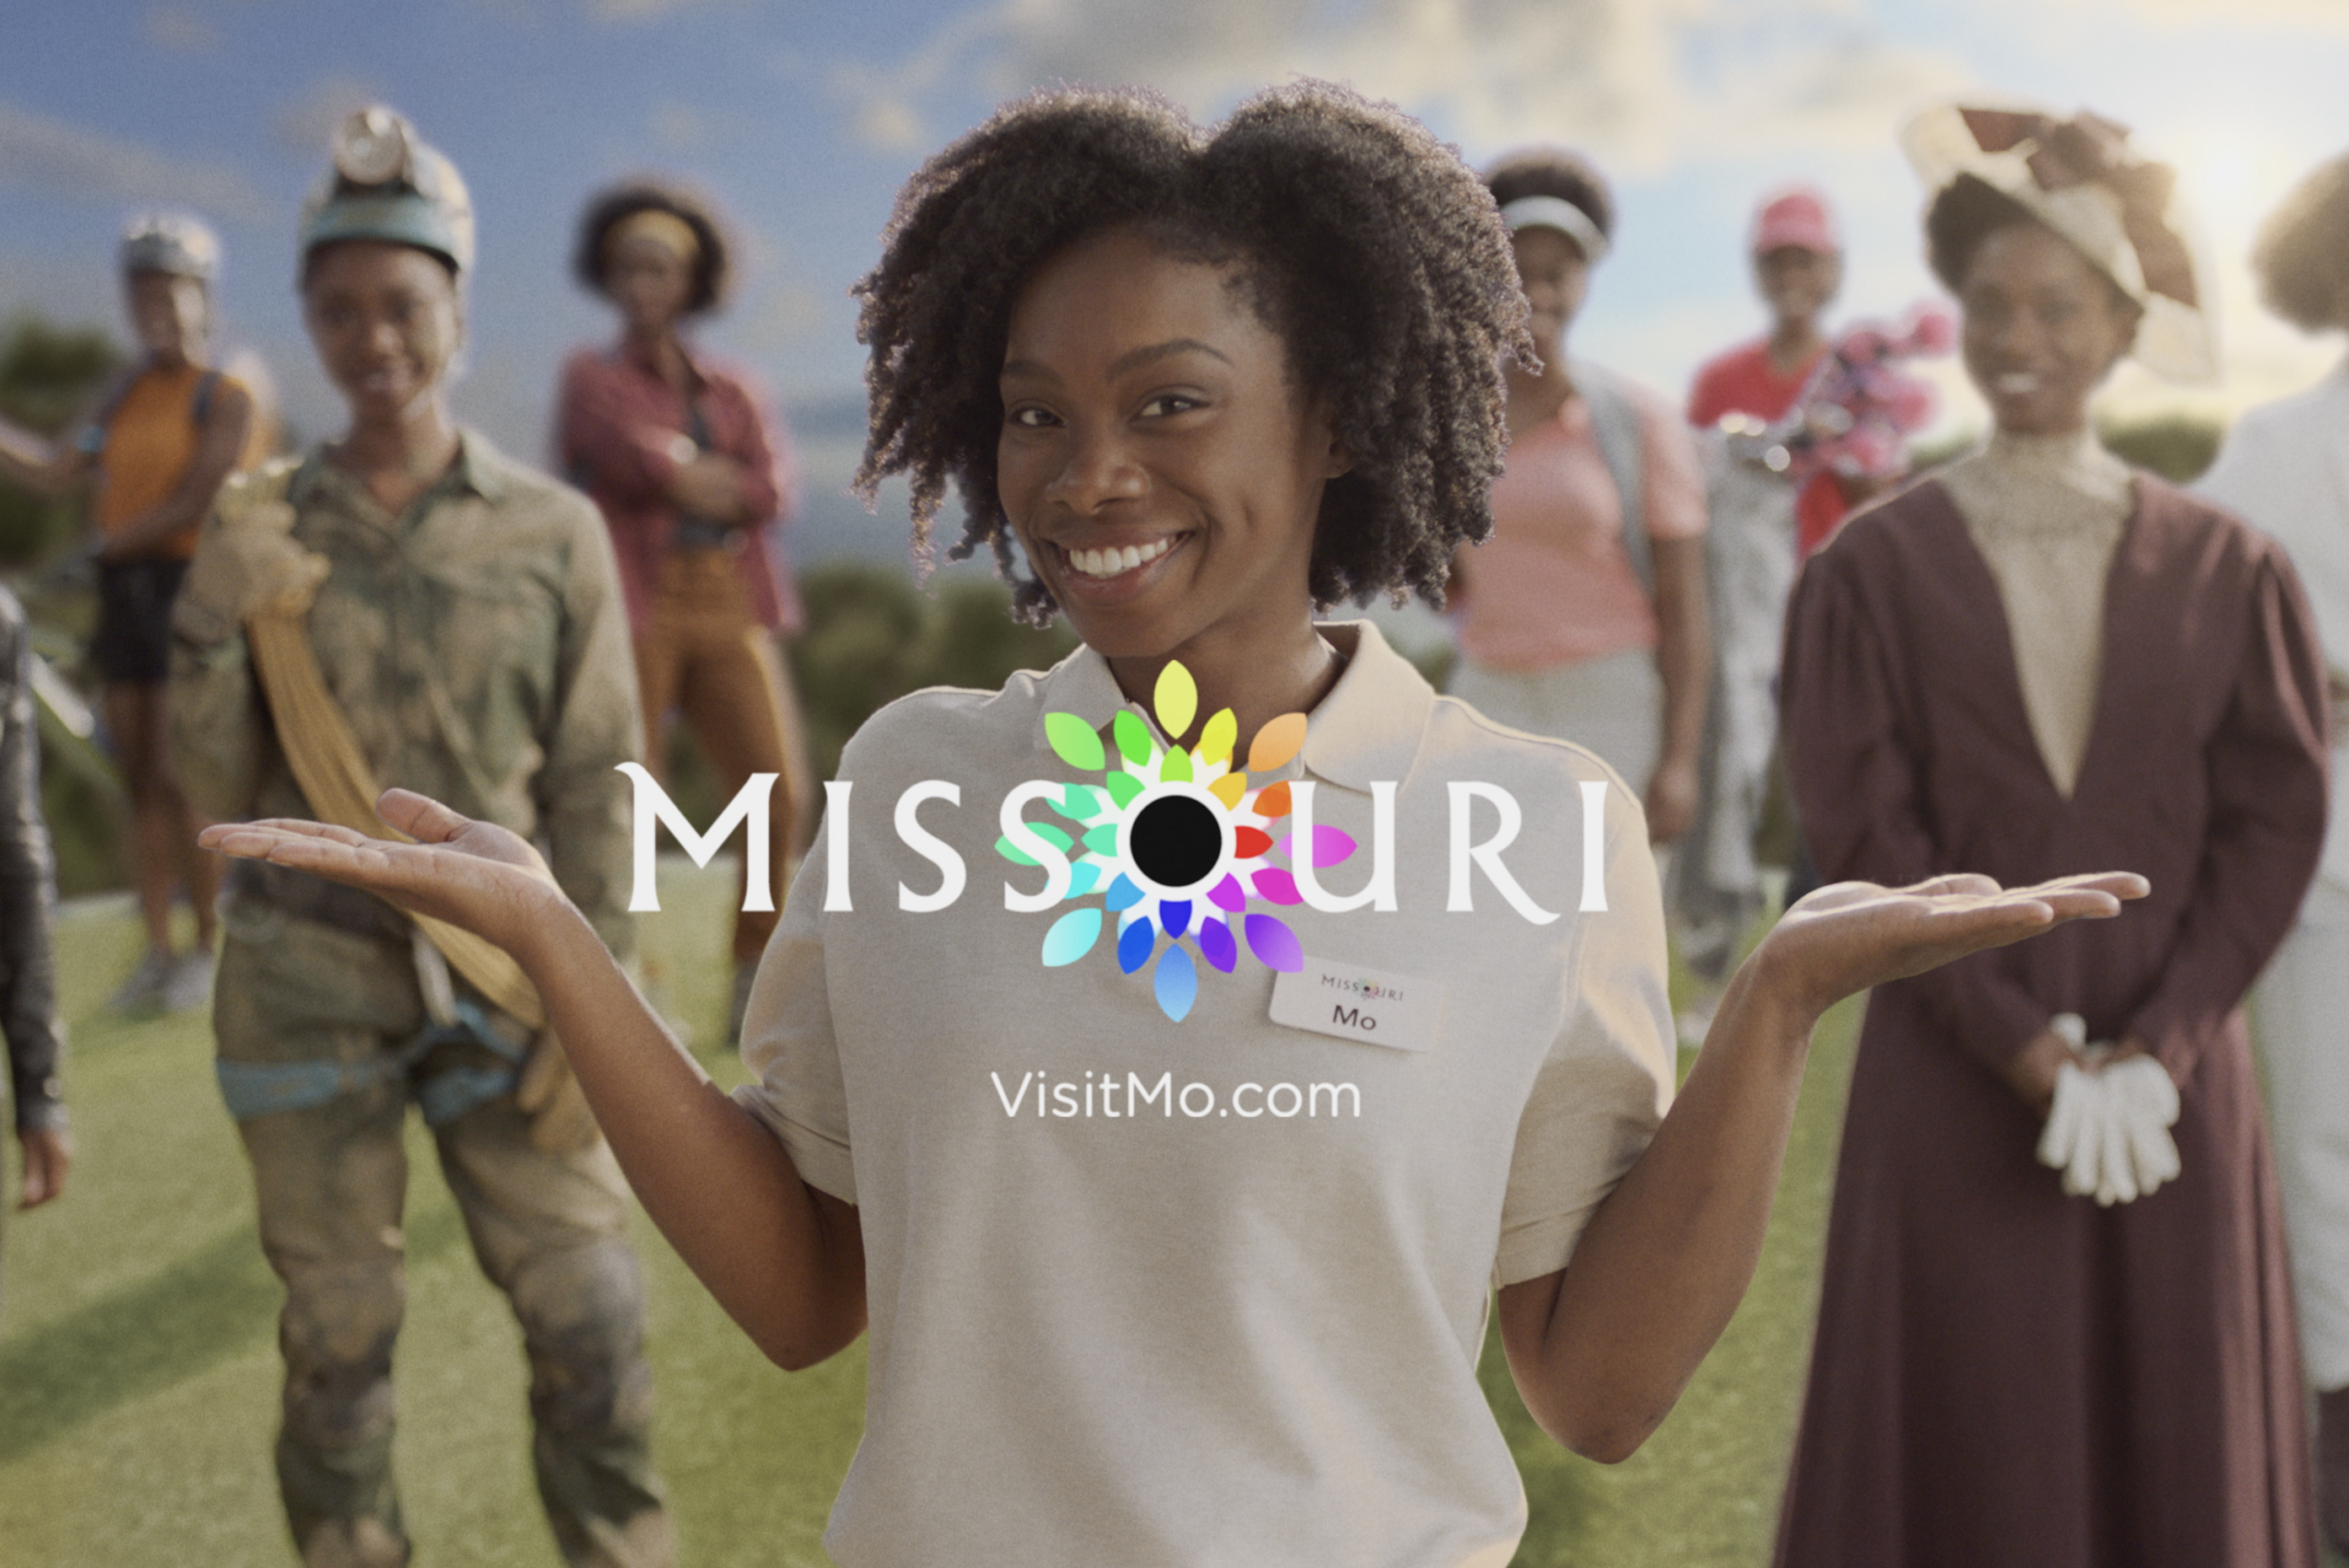 An award-winning Missouri Division of Tourism advertisement.